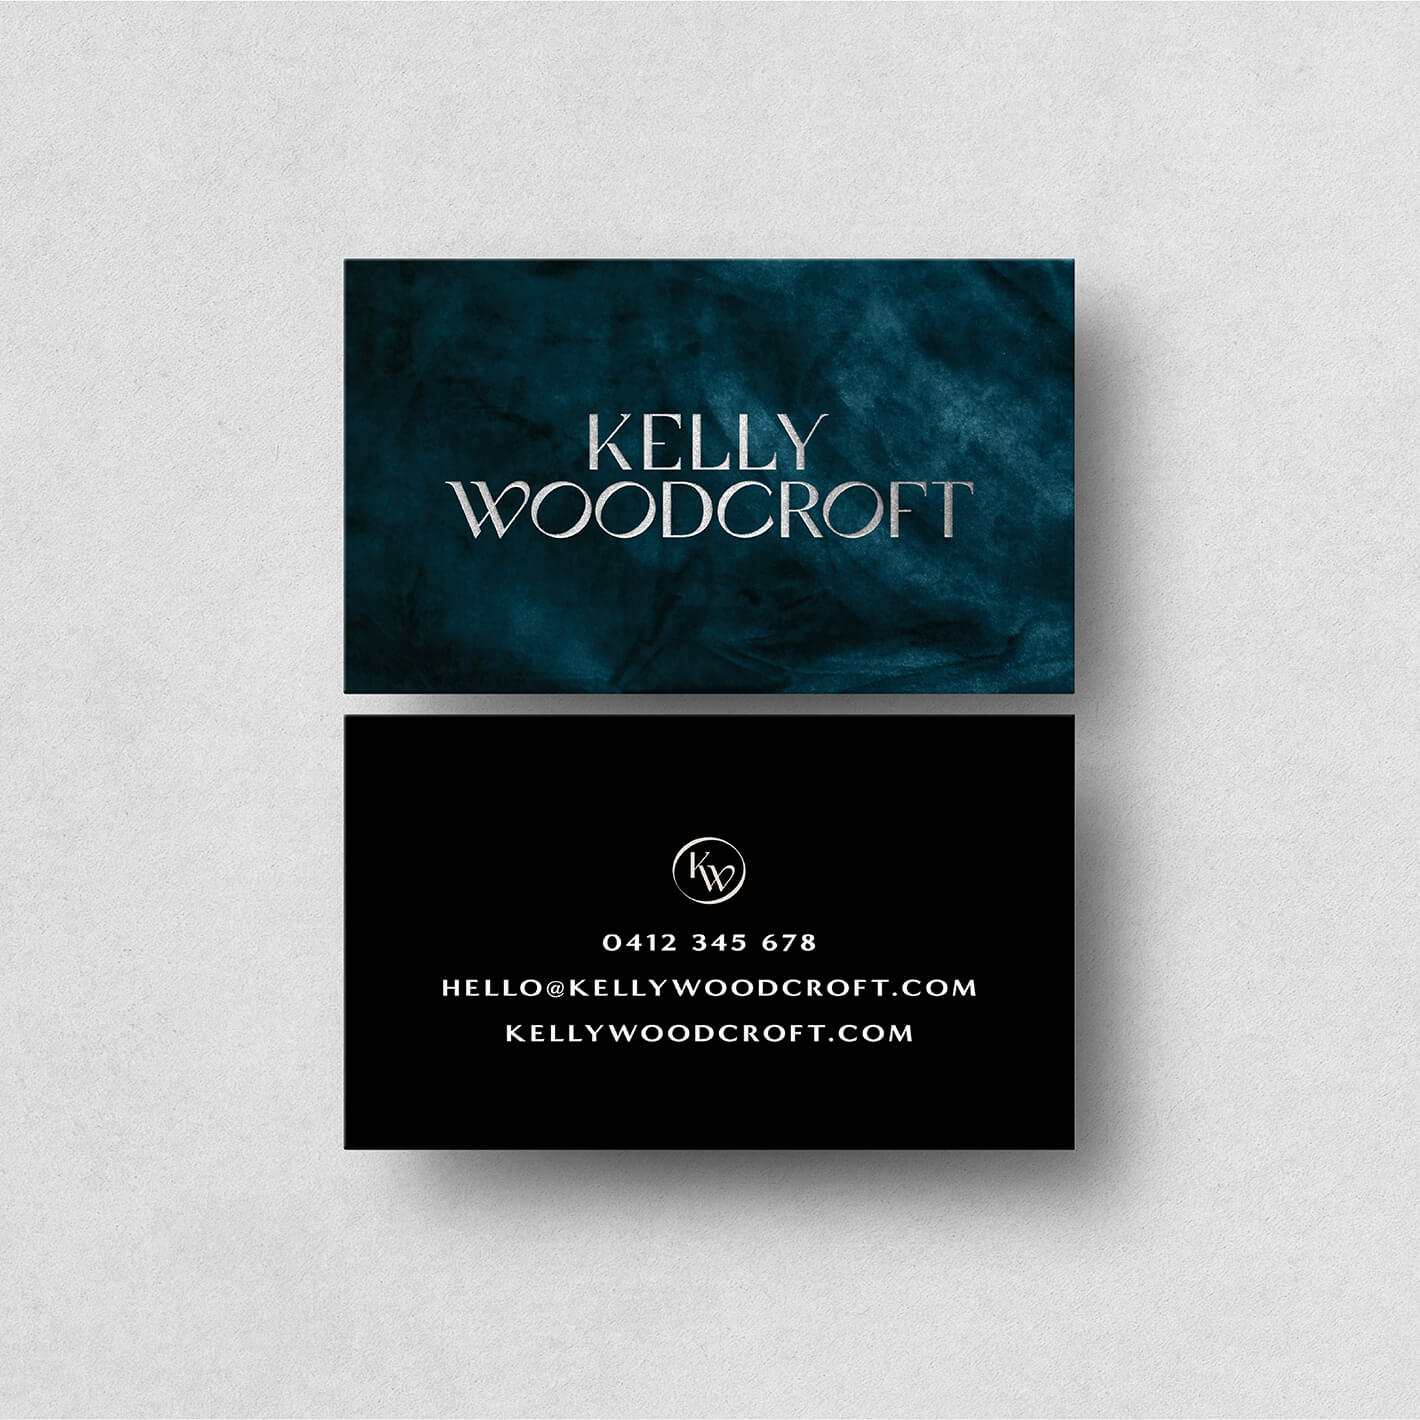 lush silver foil business card designs for fashion designer kelly woodcroft